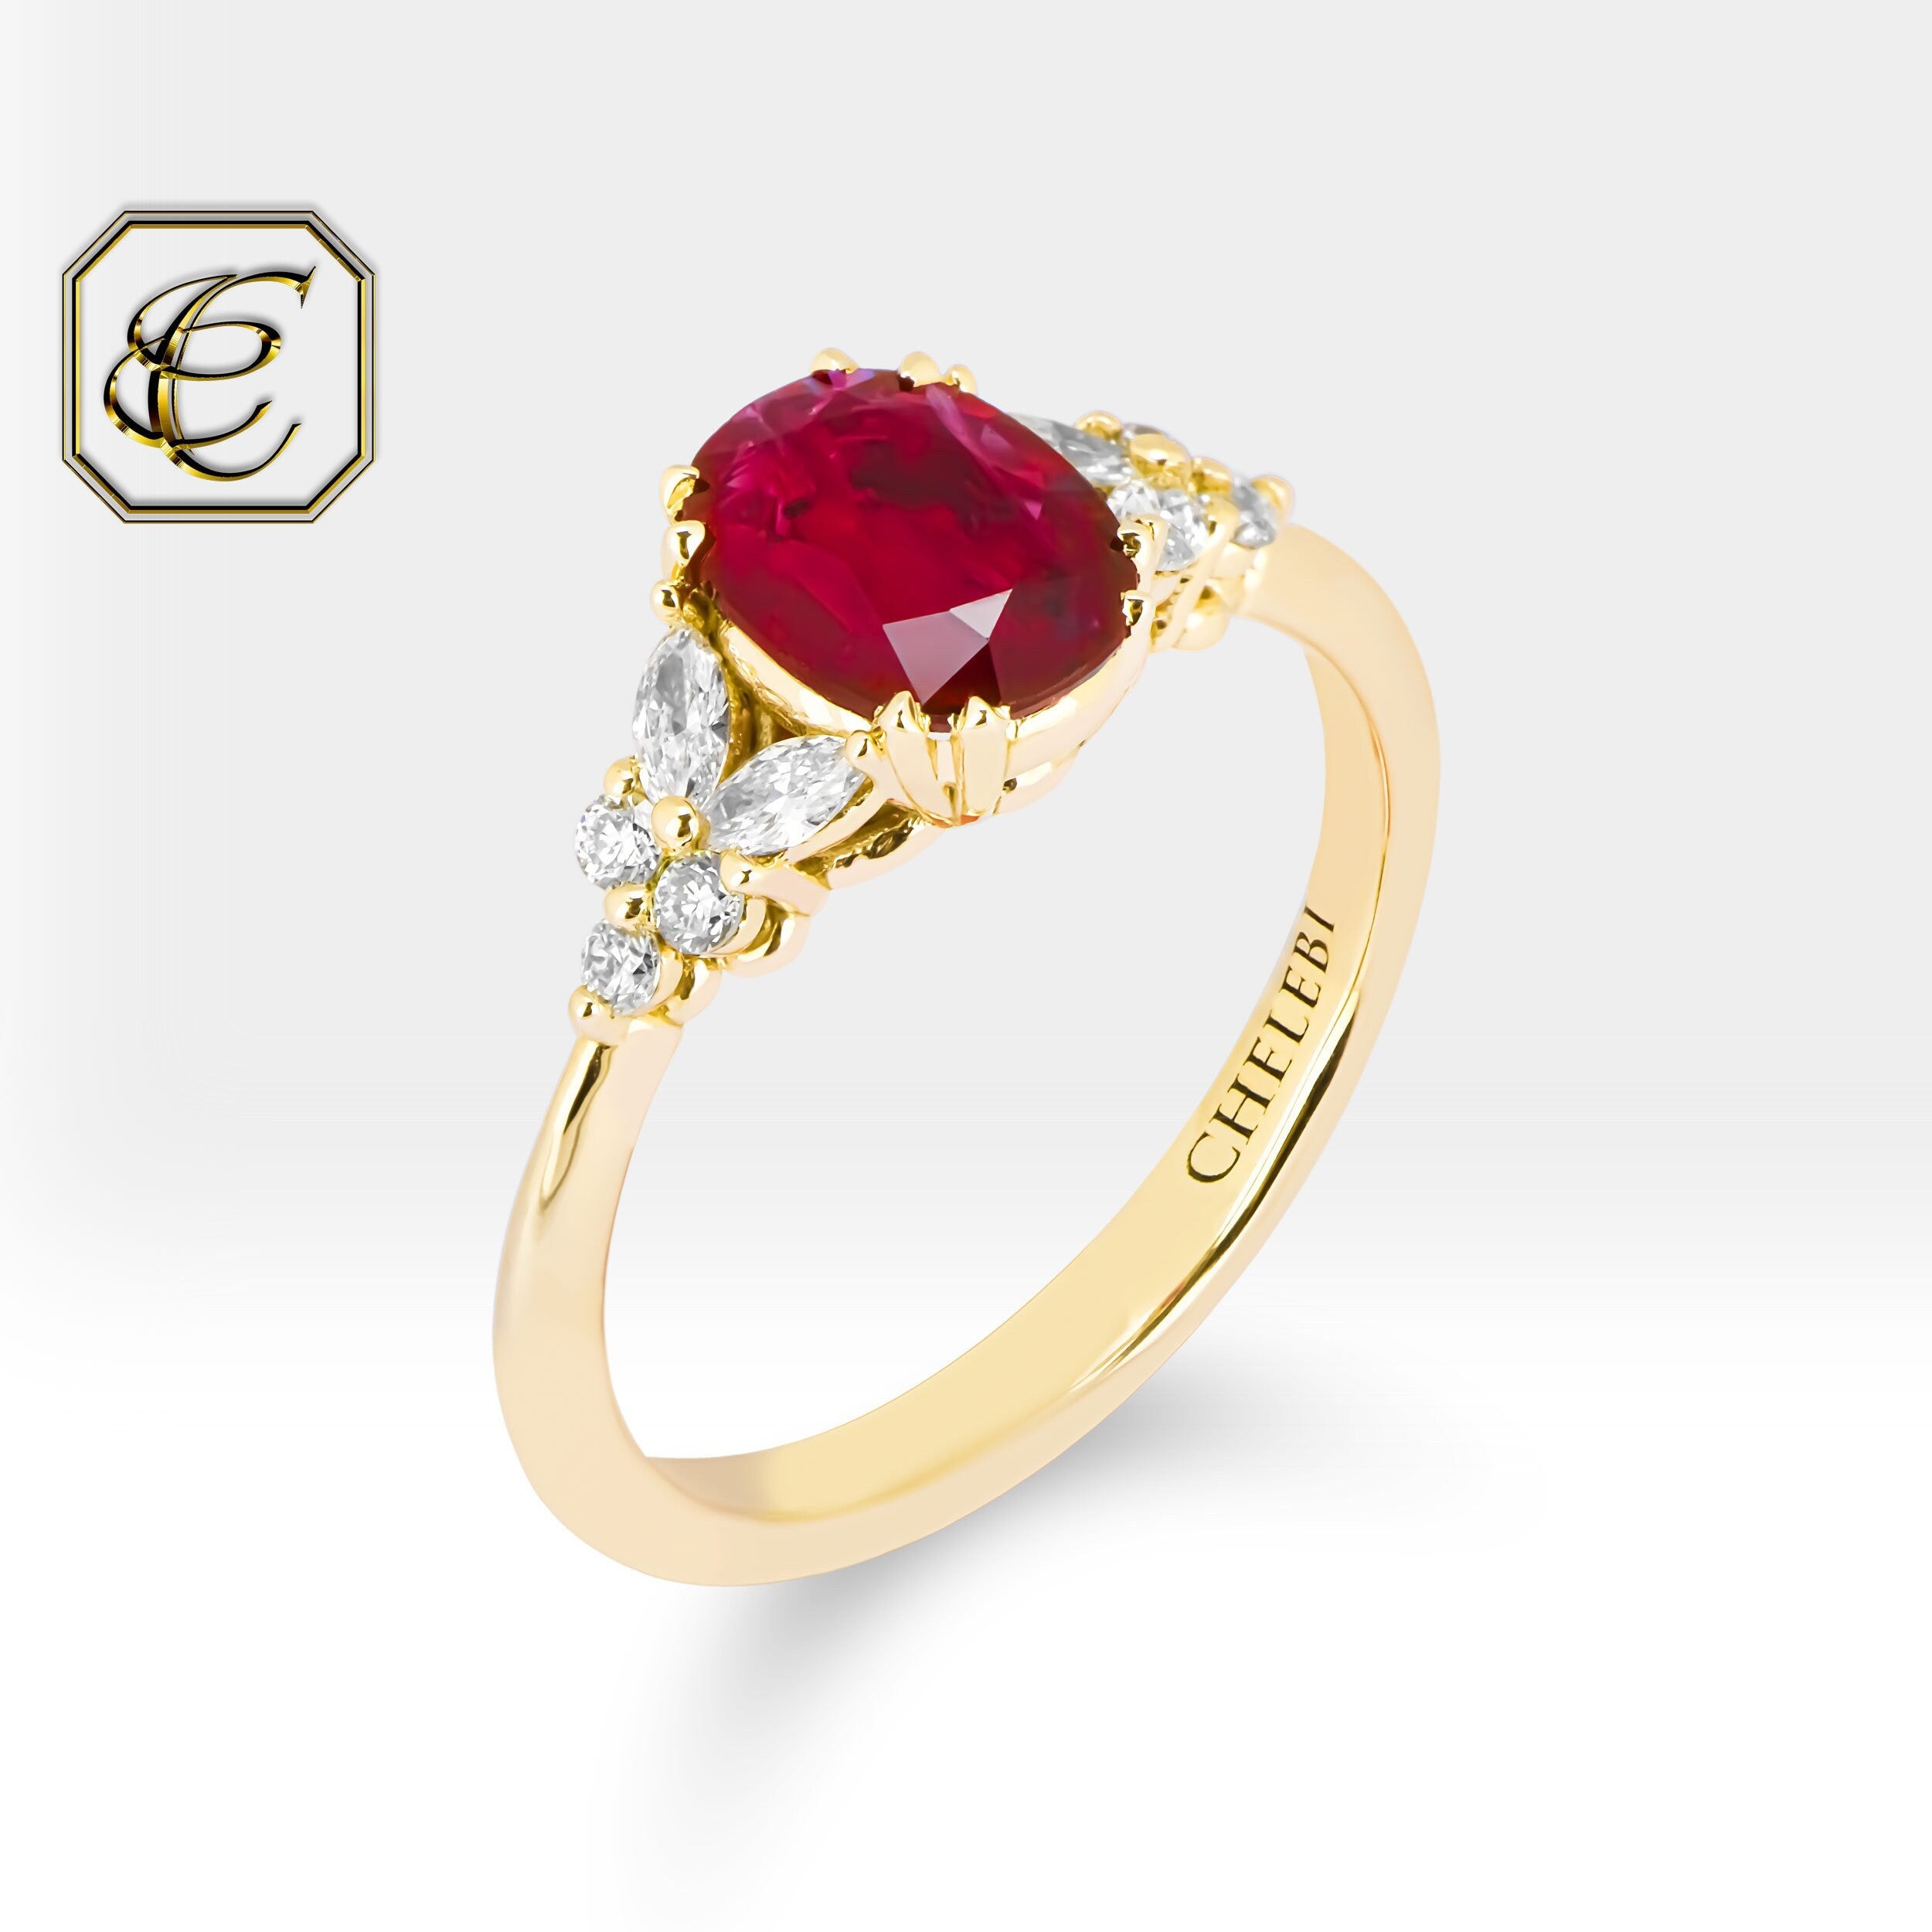 Burma Ruby Engagement Ring